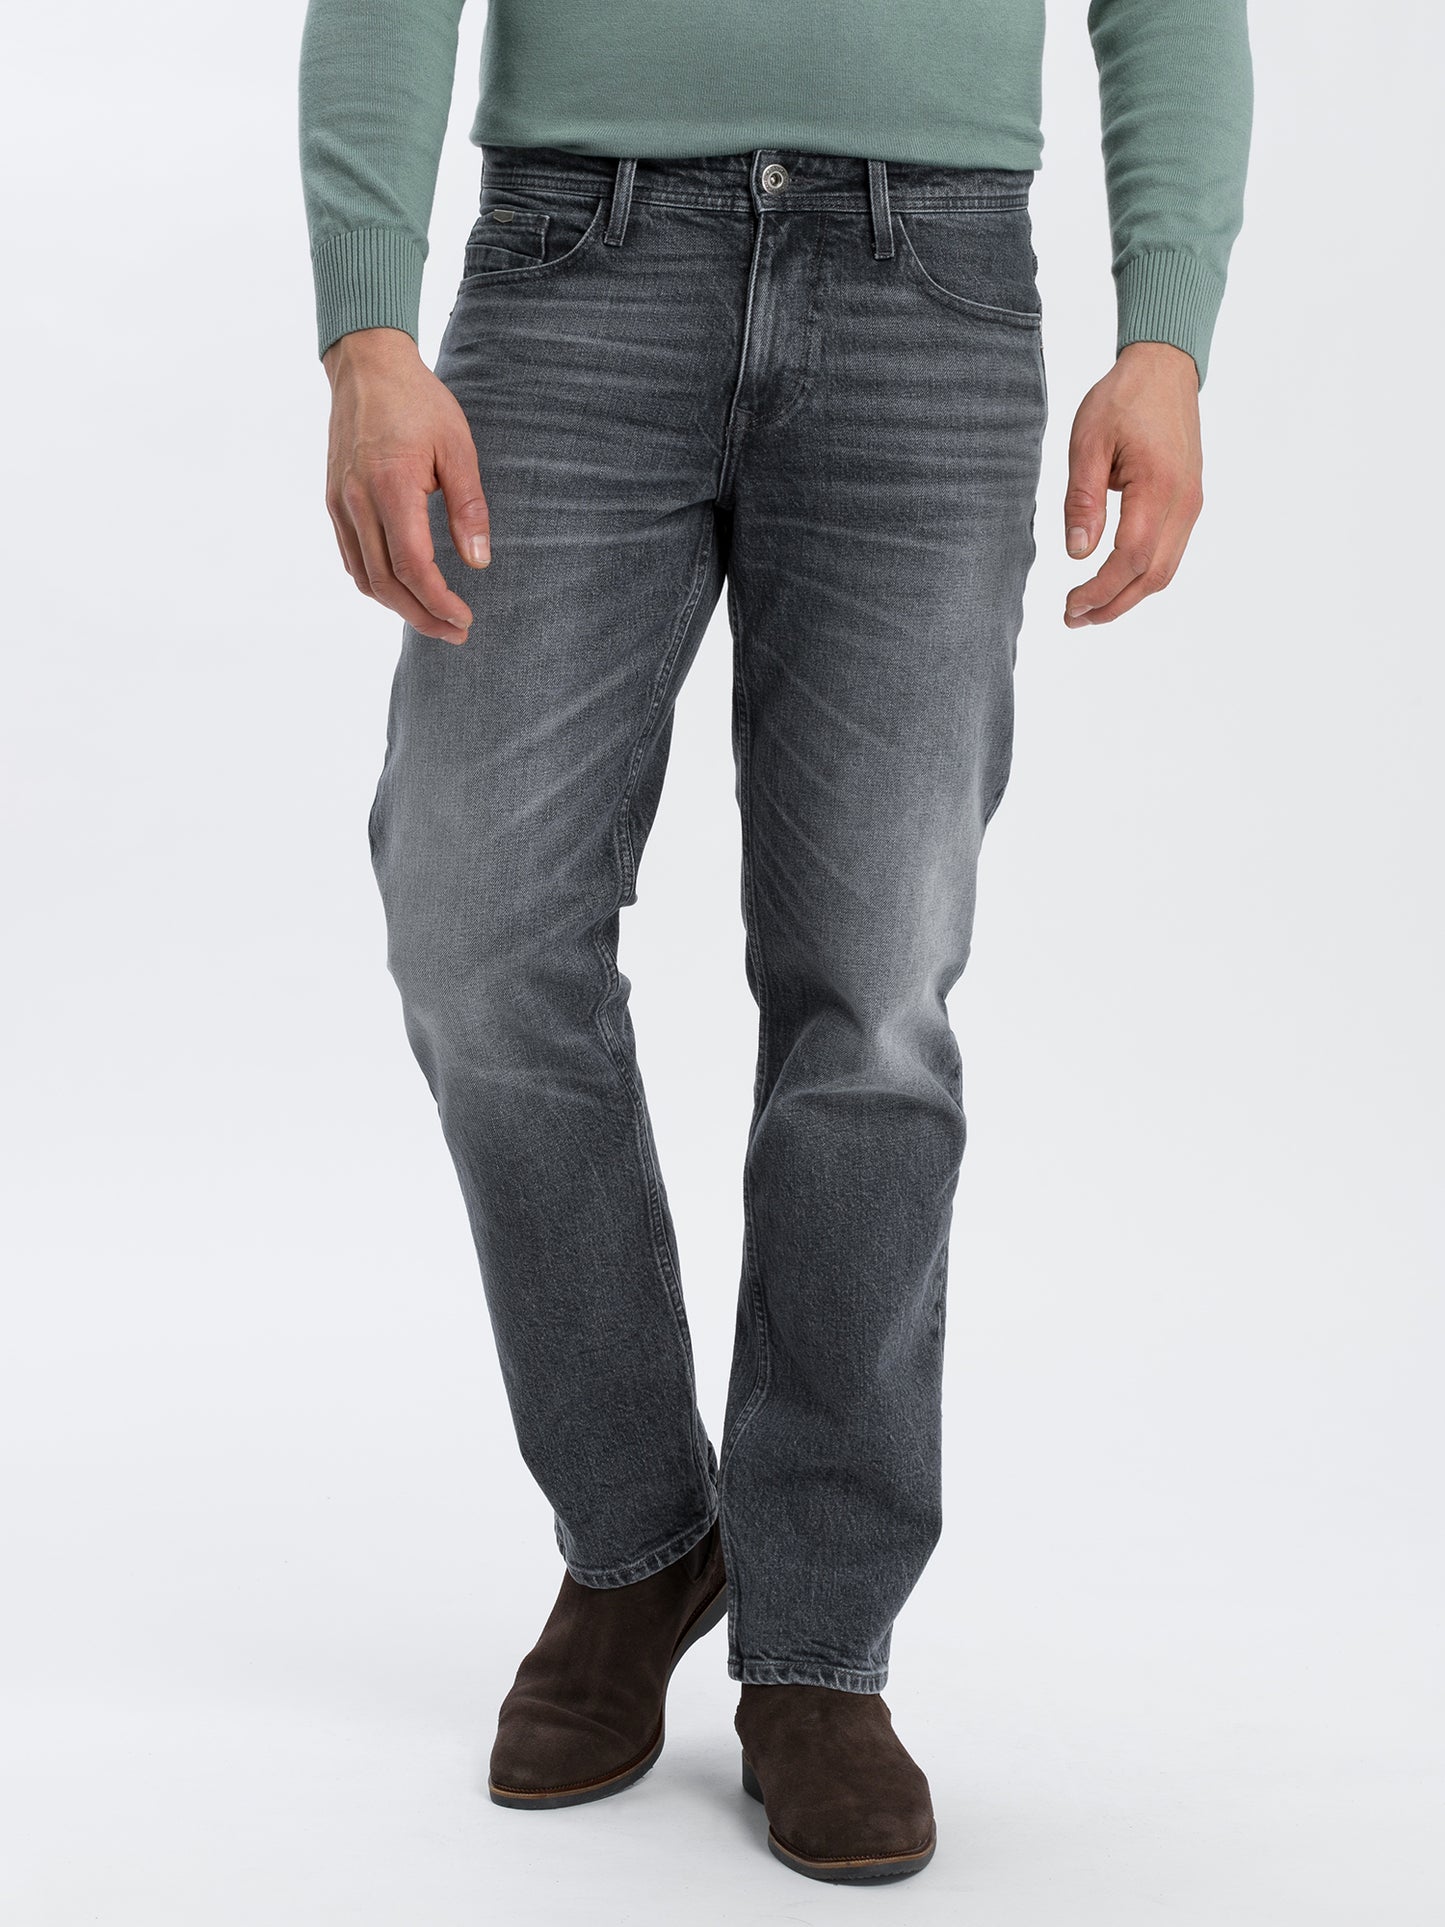 Antonio Herren Jeans Relaxed Fit Regular Waist Straight Leg dunkelgrau